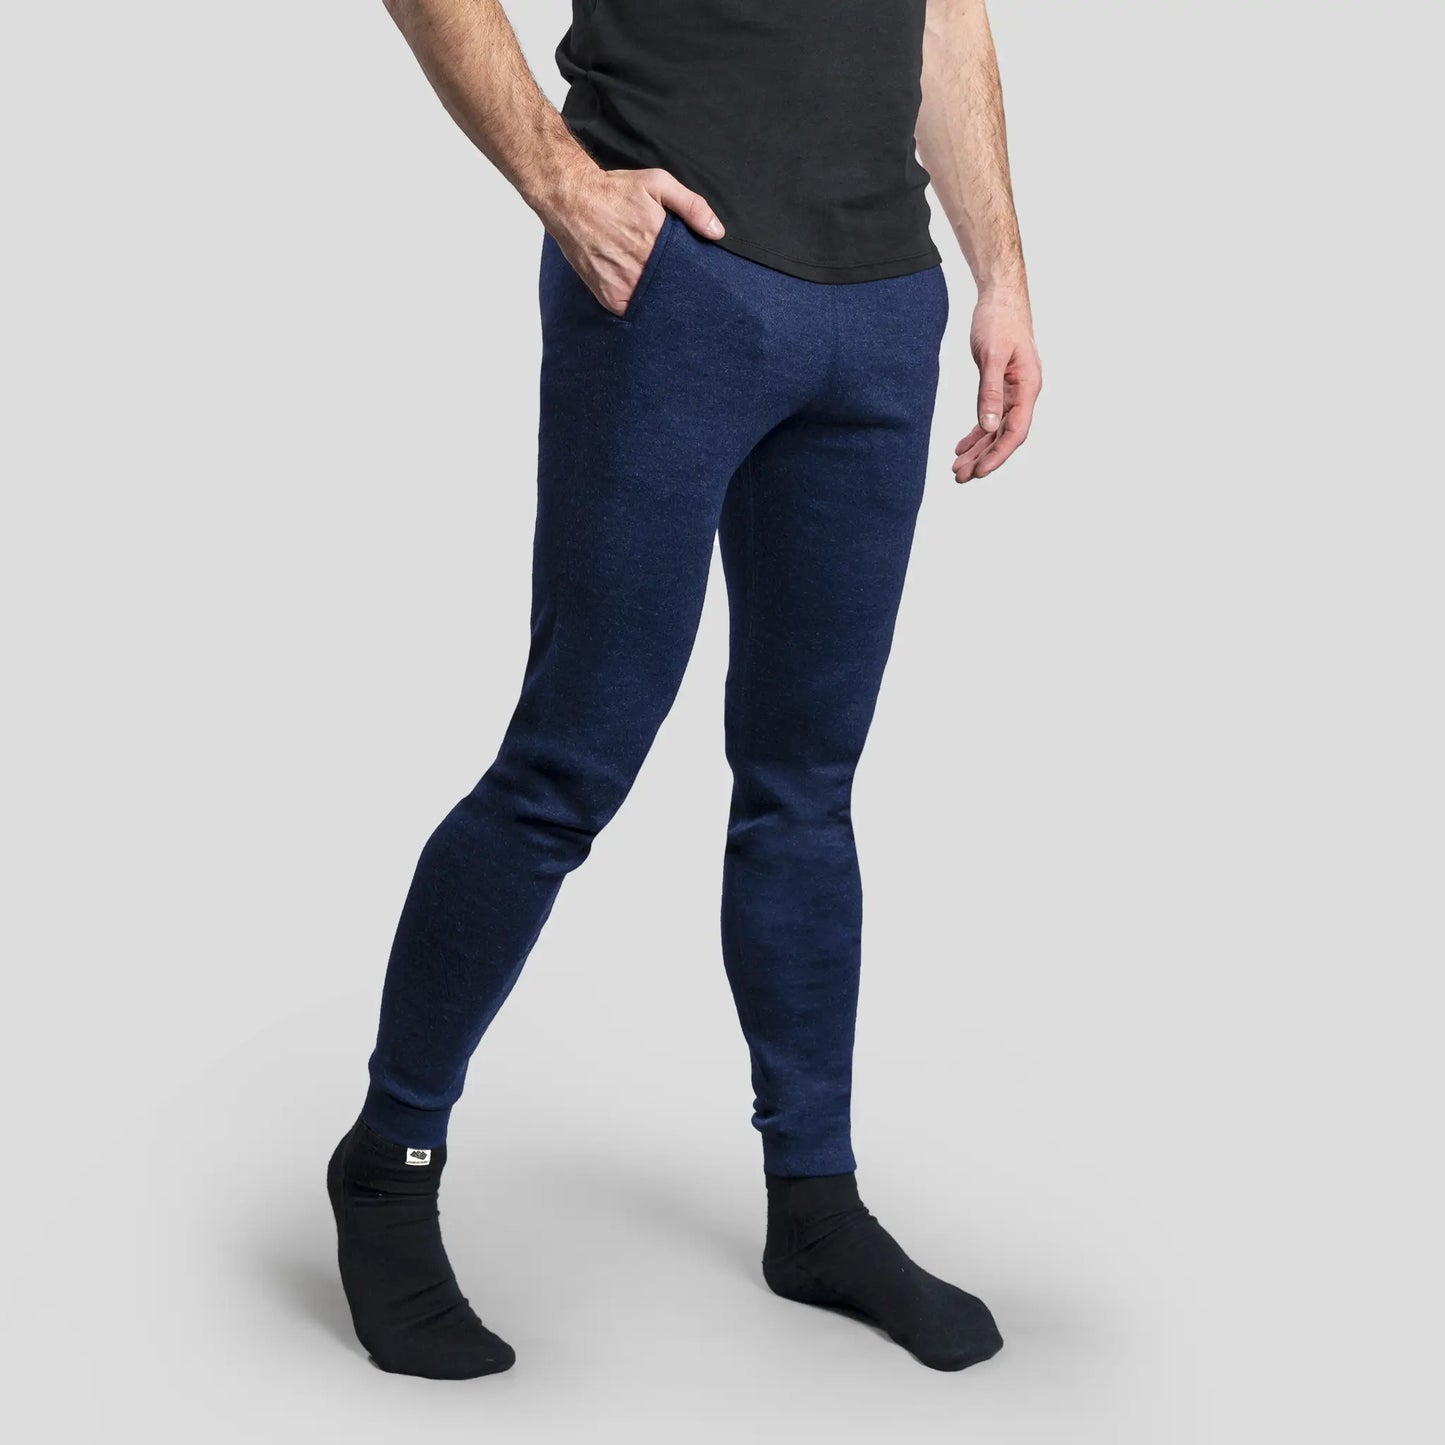 mens super warm soft sustainable sweatpants color navy blue